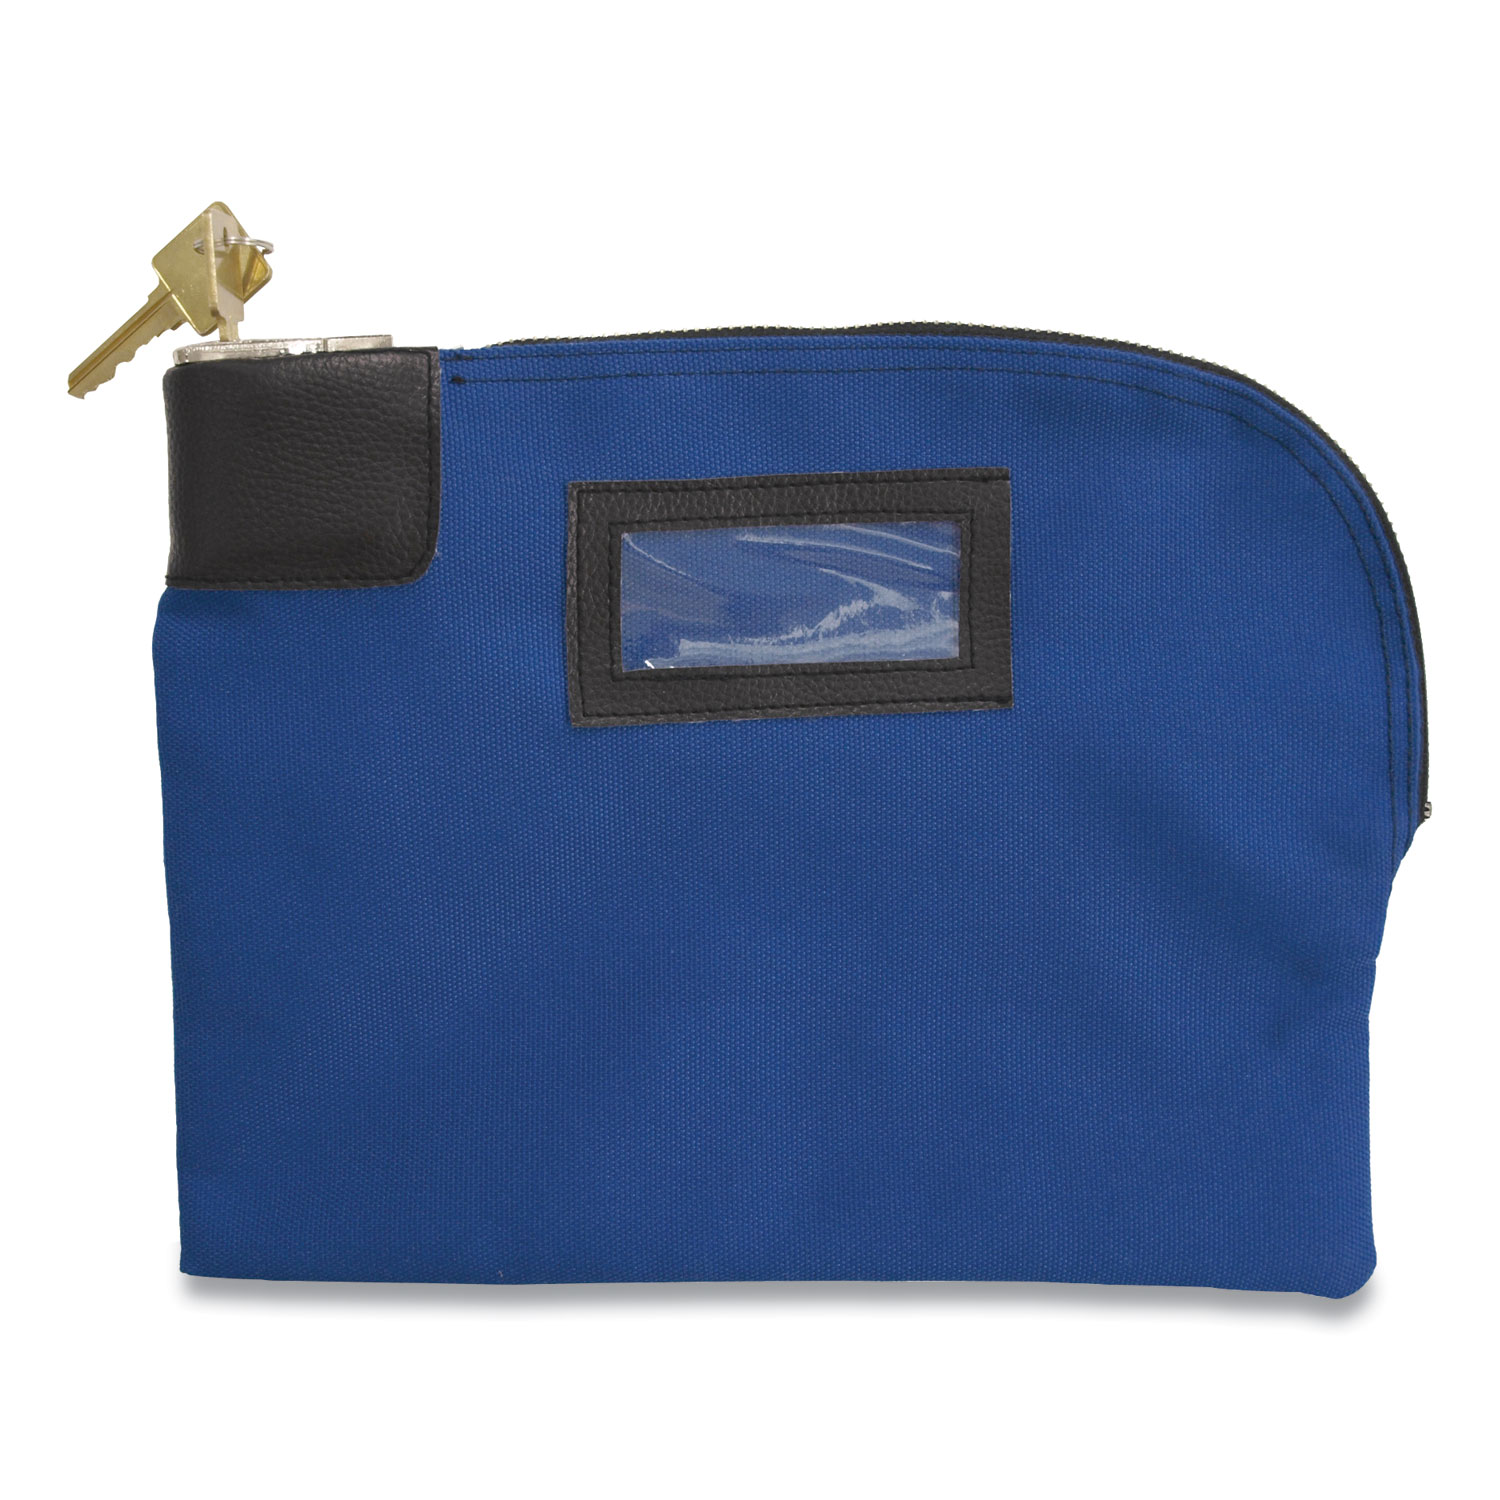  CONTROLTEK 530312 Fabric Deposit Bag, Locking, 8.5 x 11 x 1, Canvas, Blue (CNK530312) 